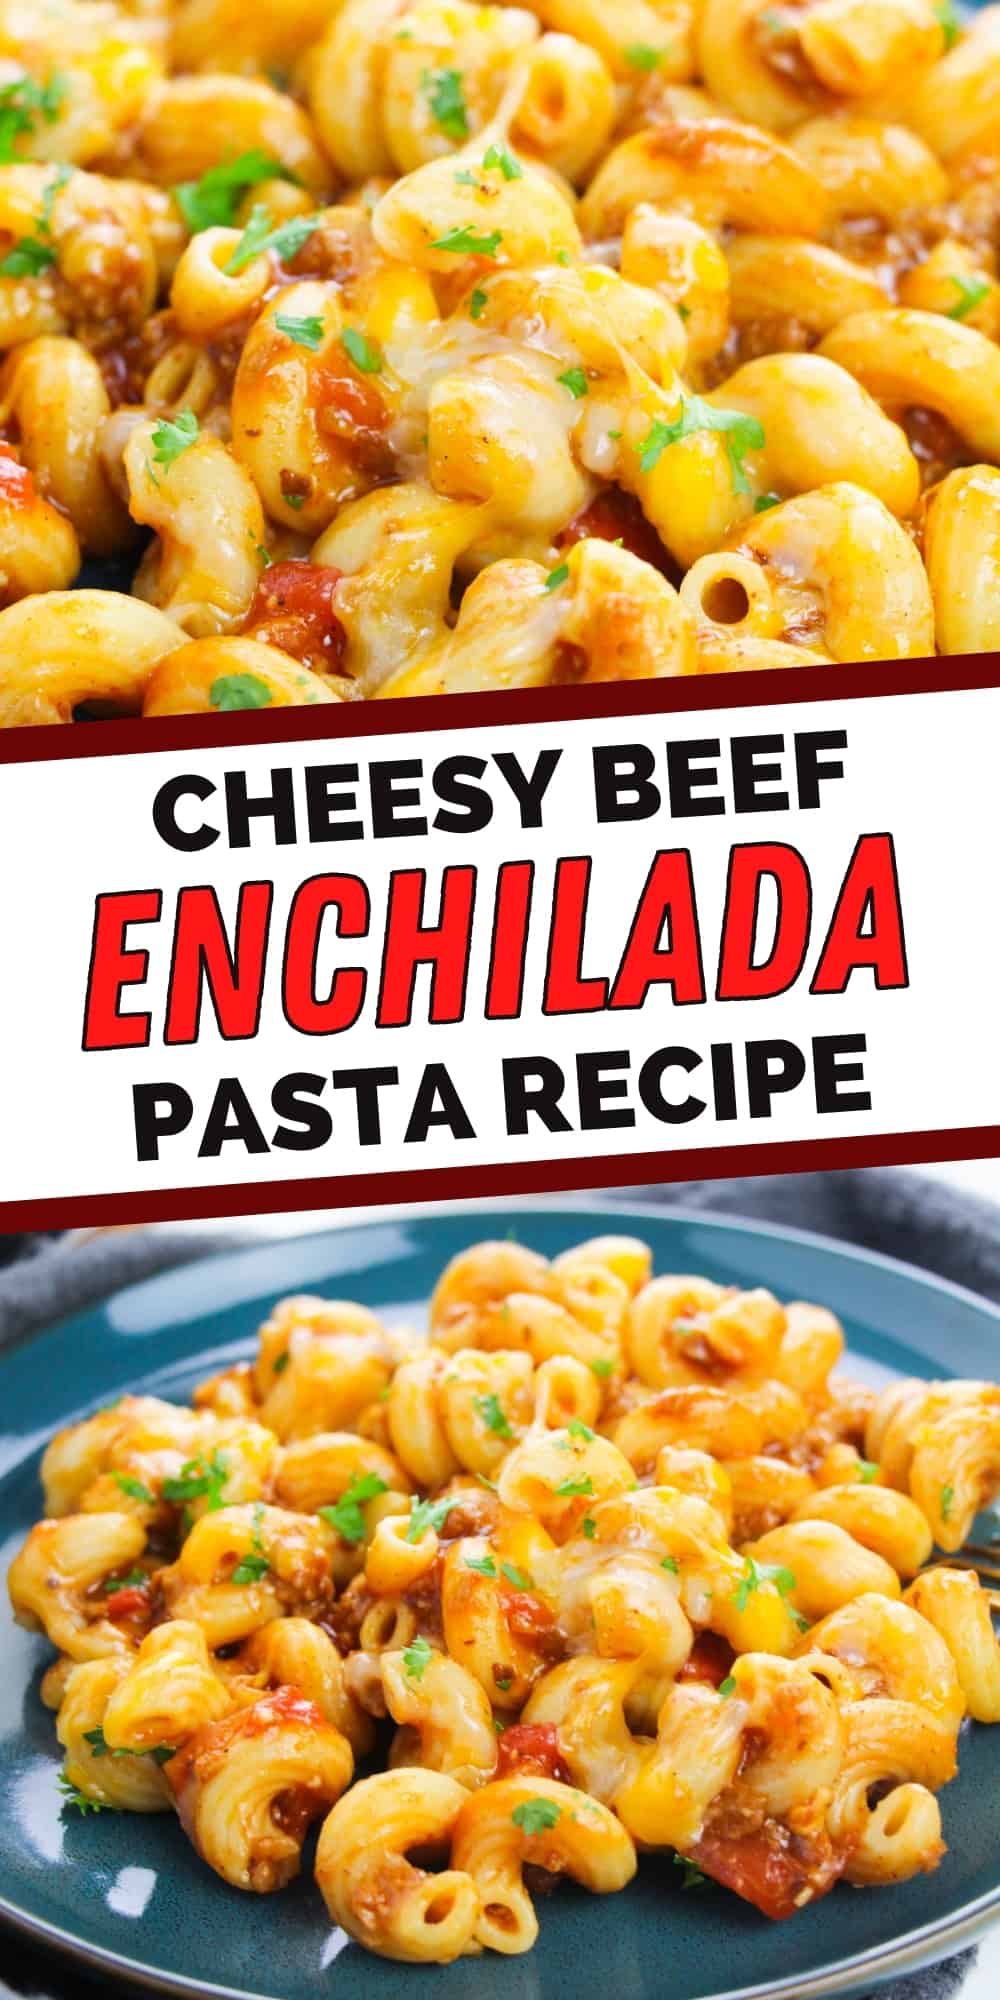 Cheesy Beef Enchilada Pasta Recipe